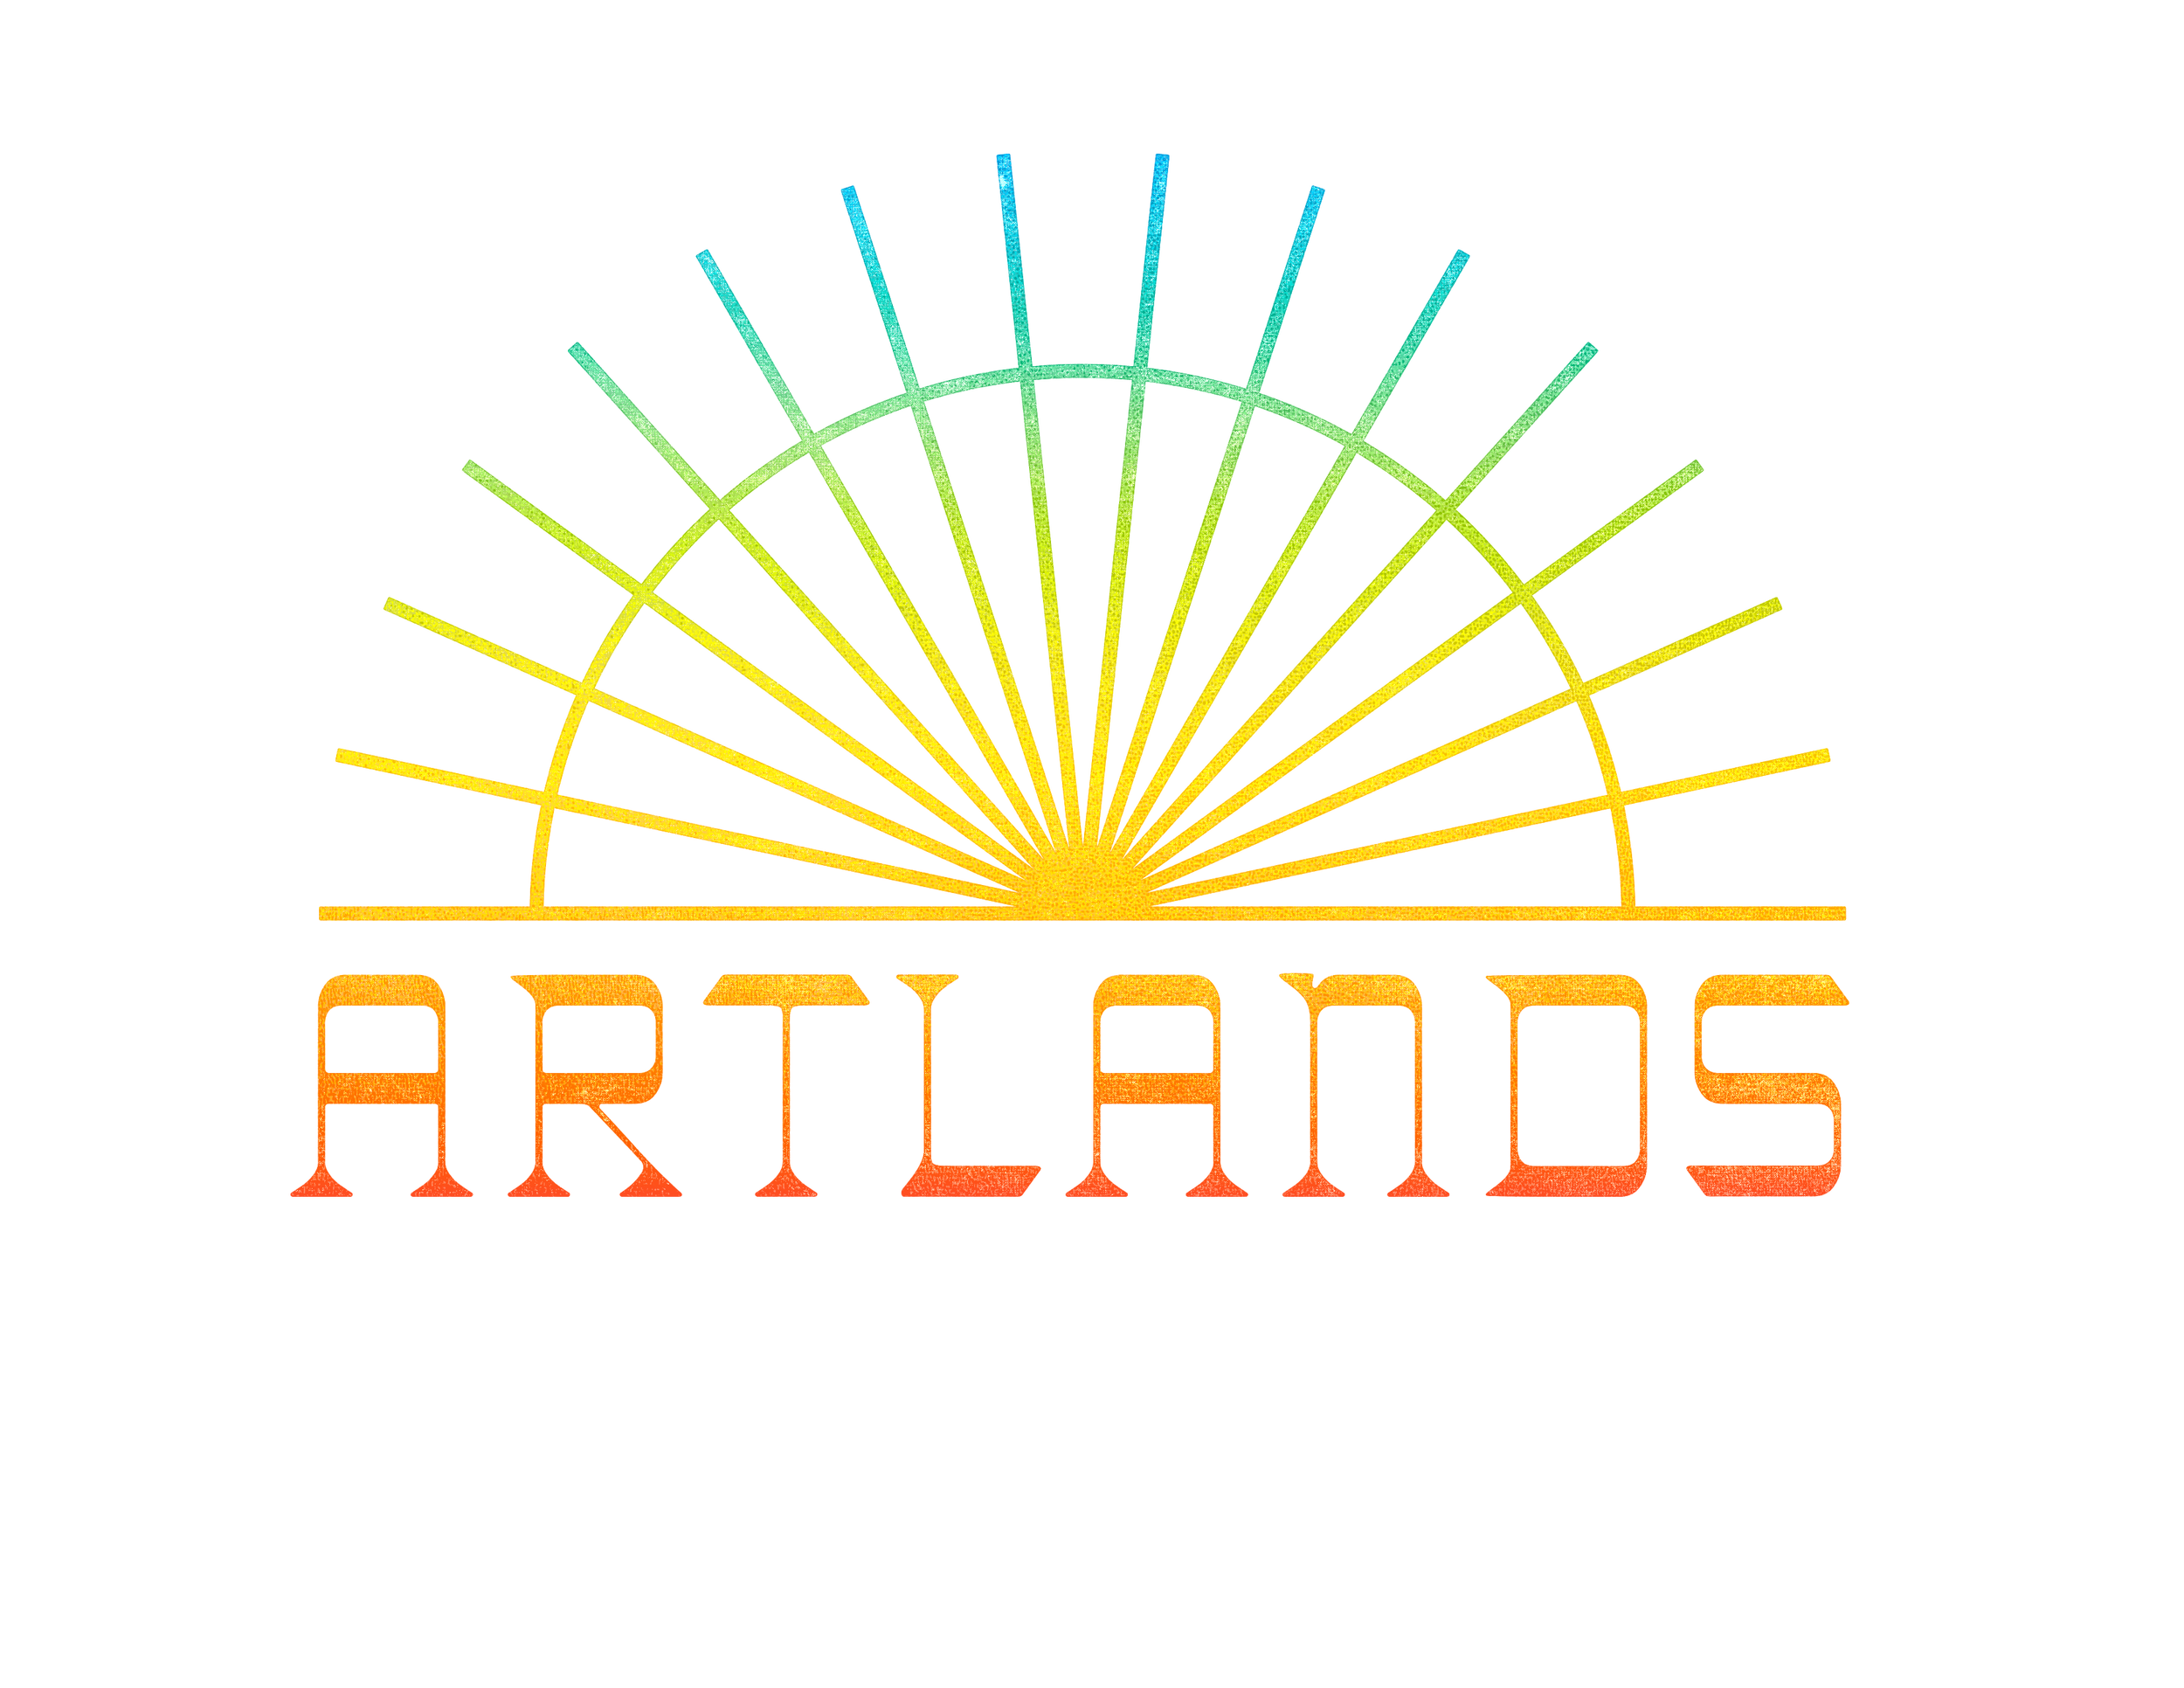 The Artlands Creative